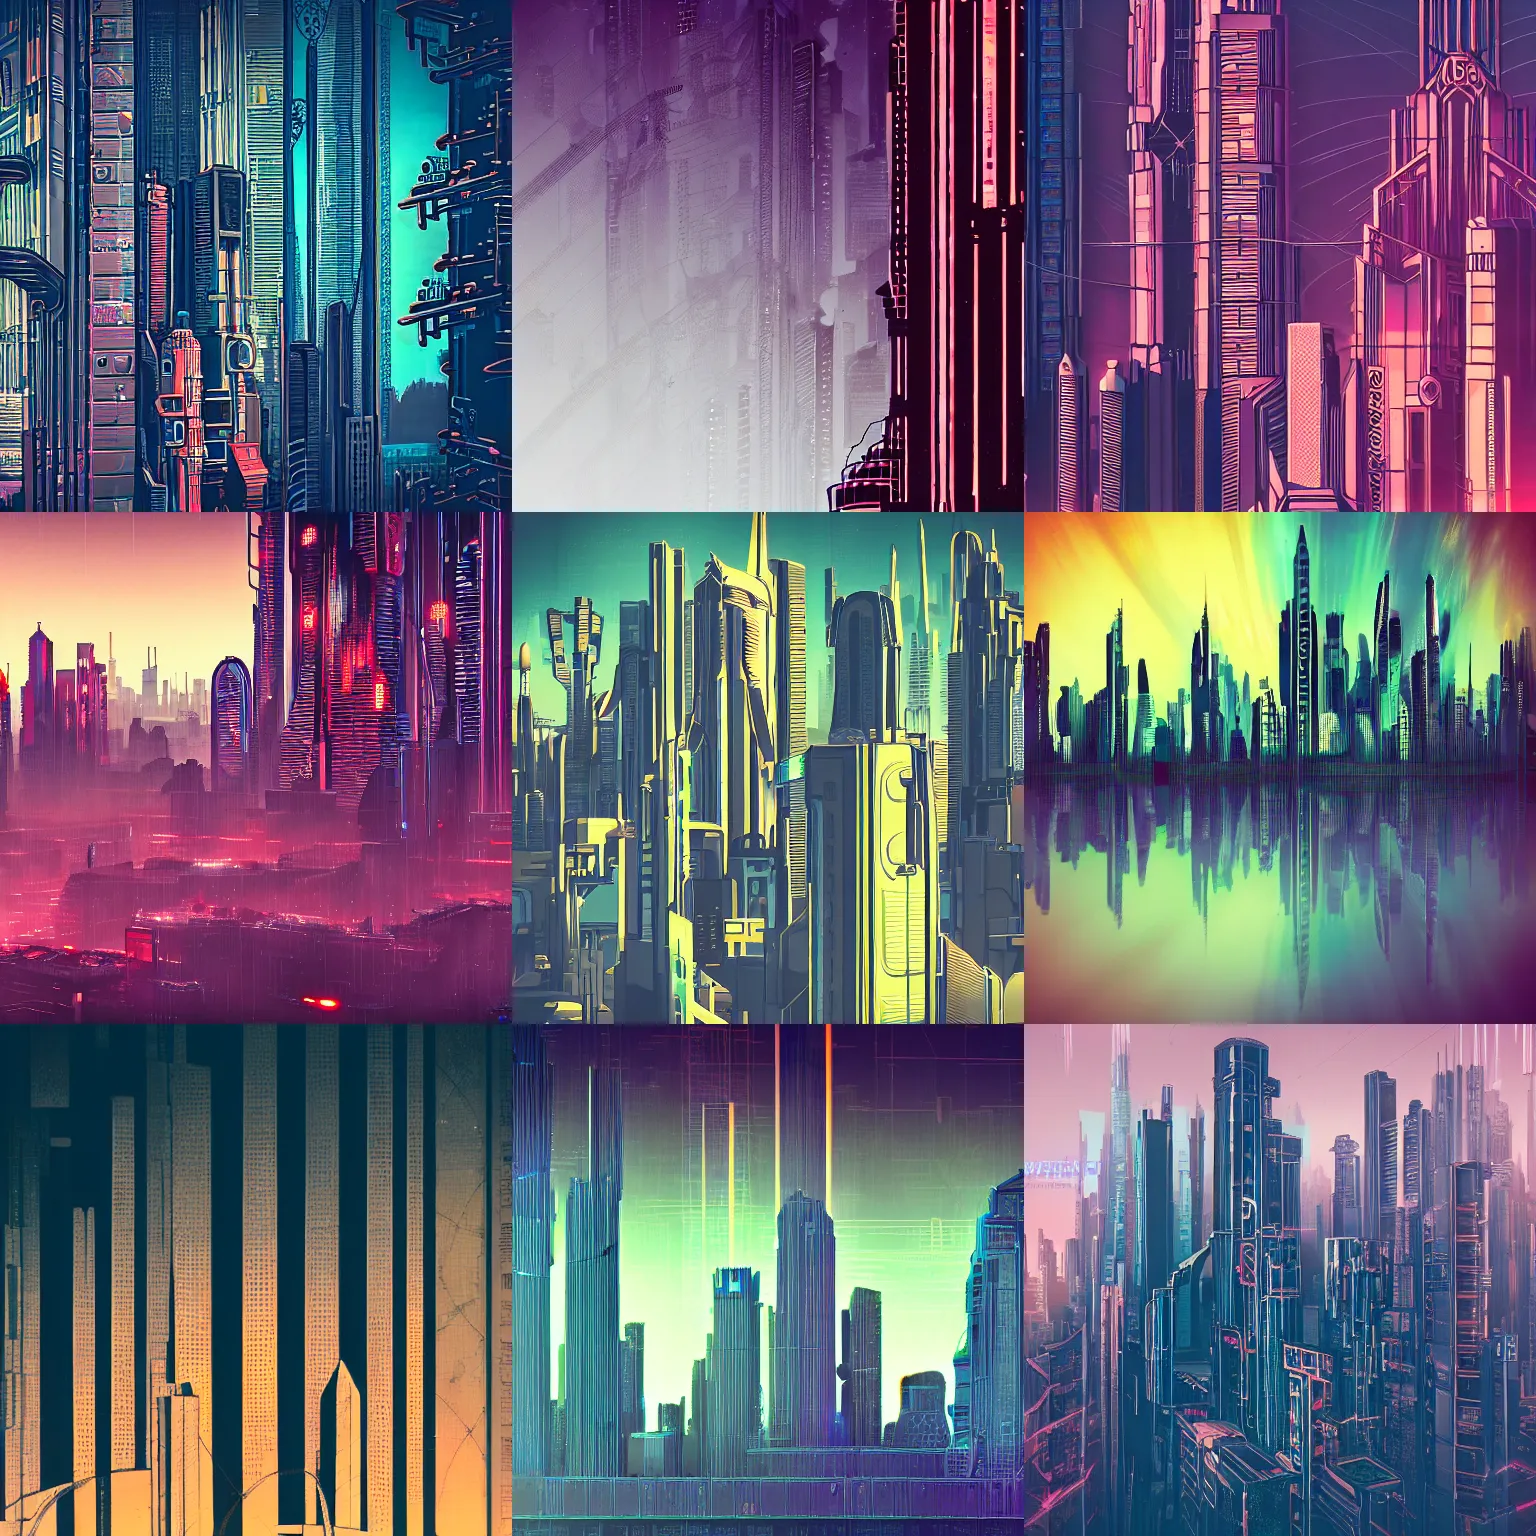 Prompt: detailed photo of a cyberpunk art deco skyline